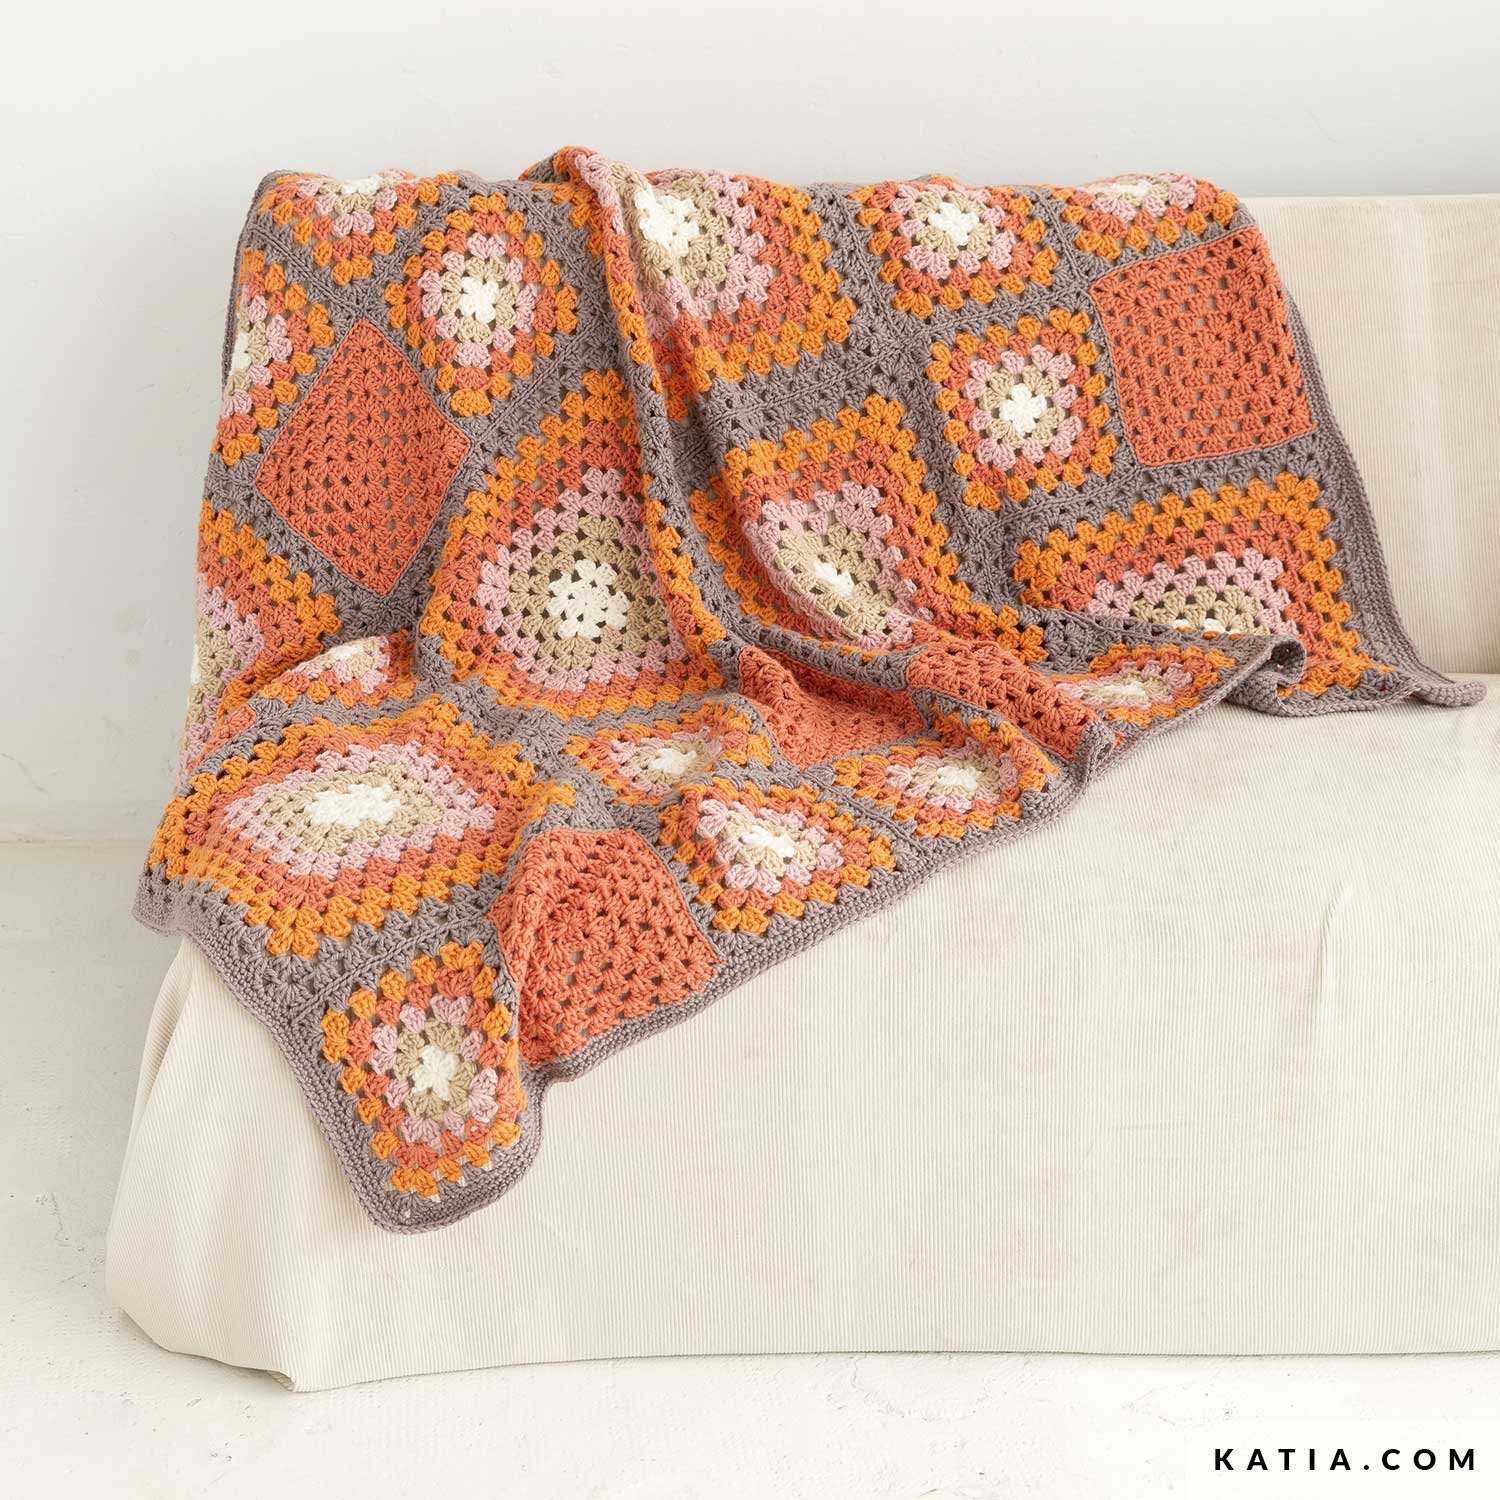 Revista de Crochet para hogar - Cuadros Granny